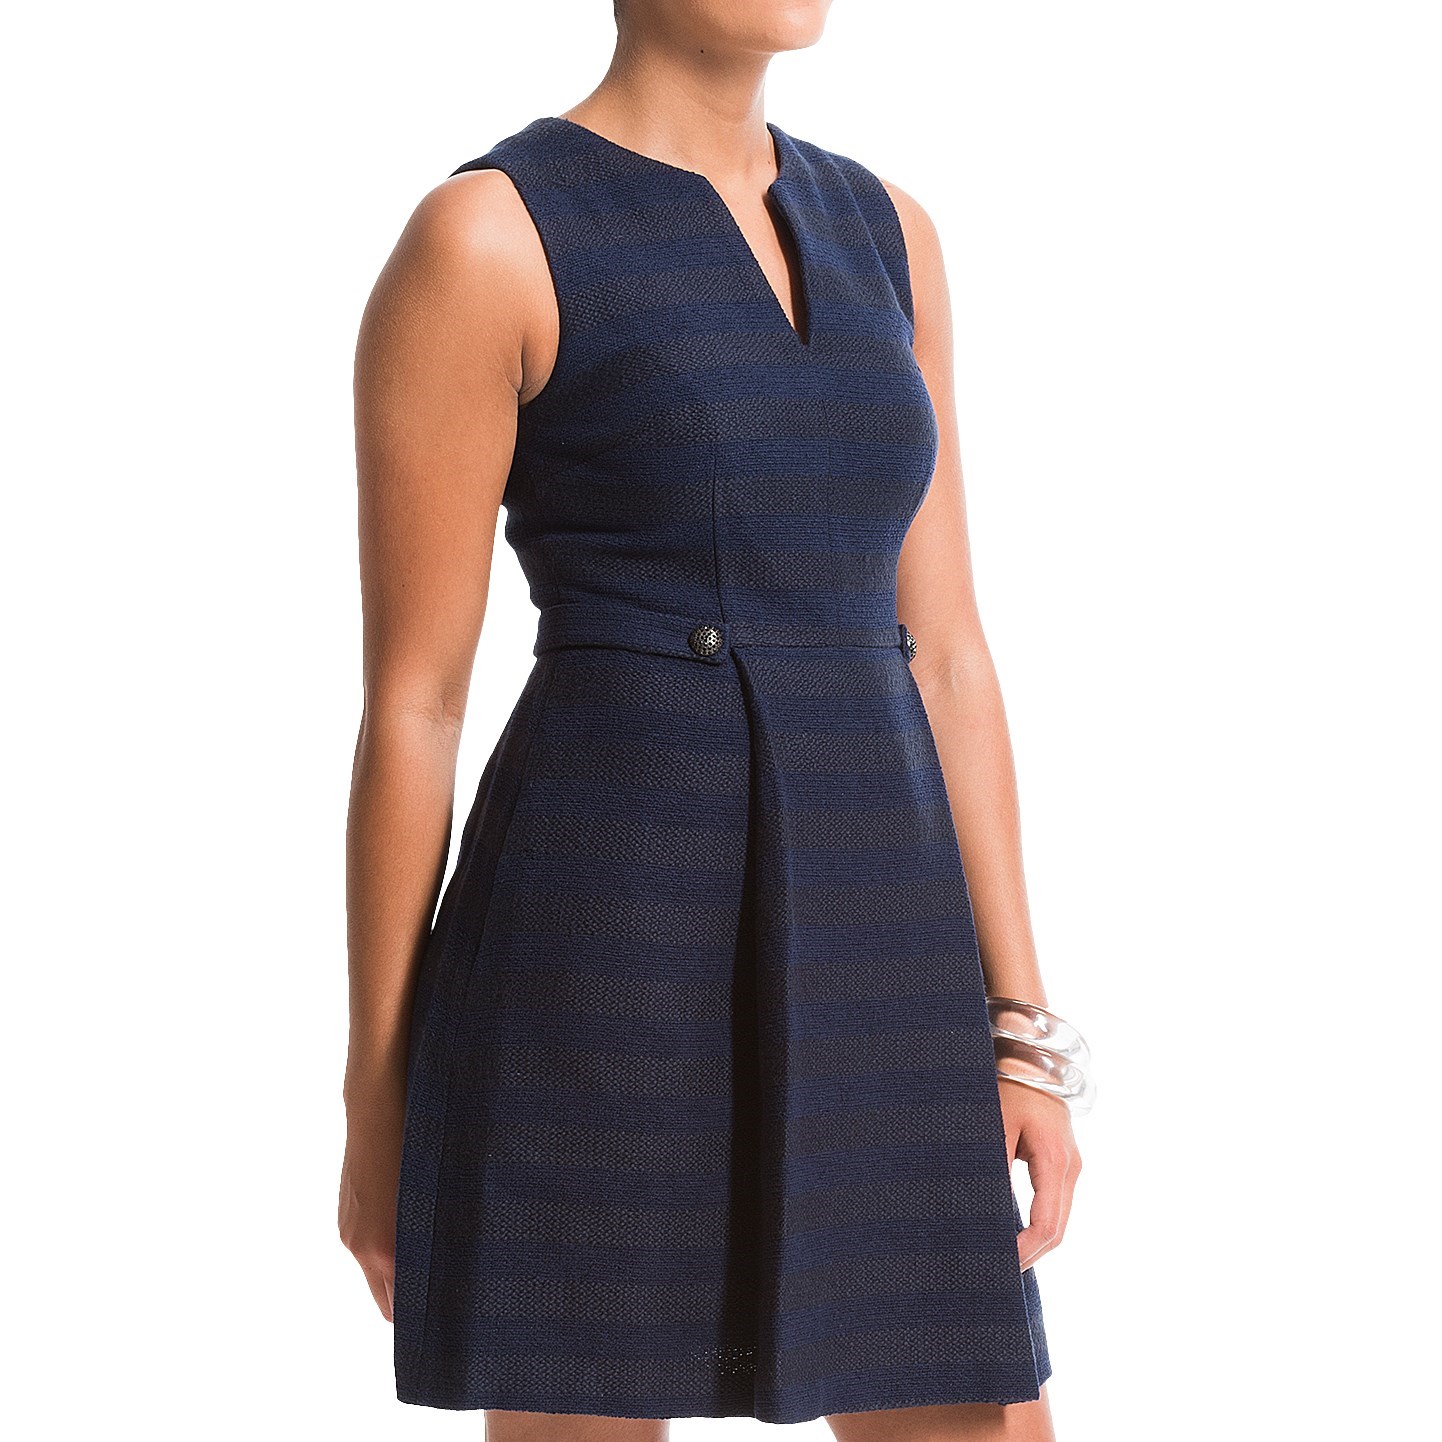 Cynthia Steffe Addison Fit & Flare Dress – Sleeveless (For Women)